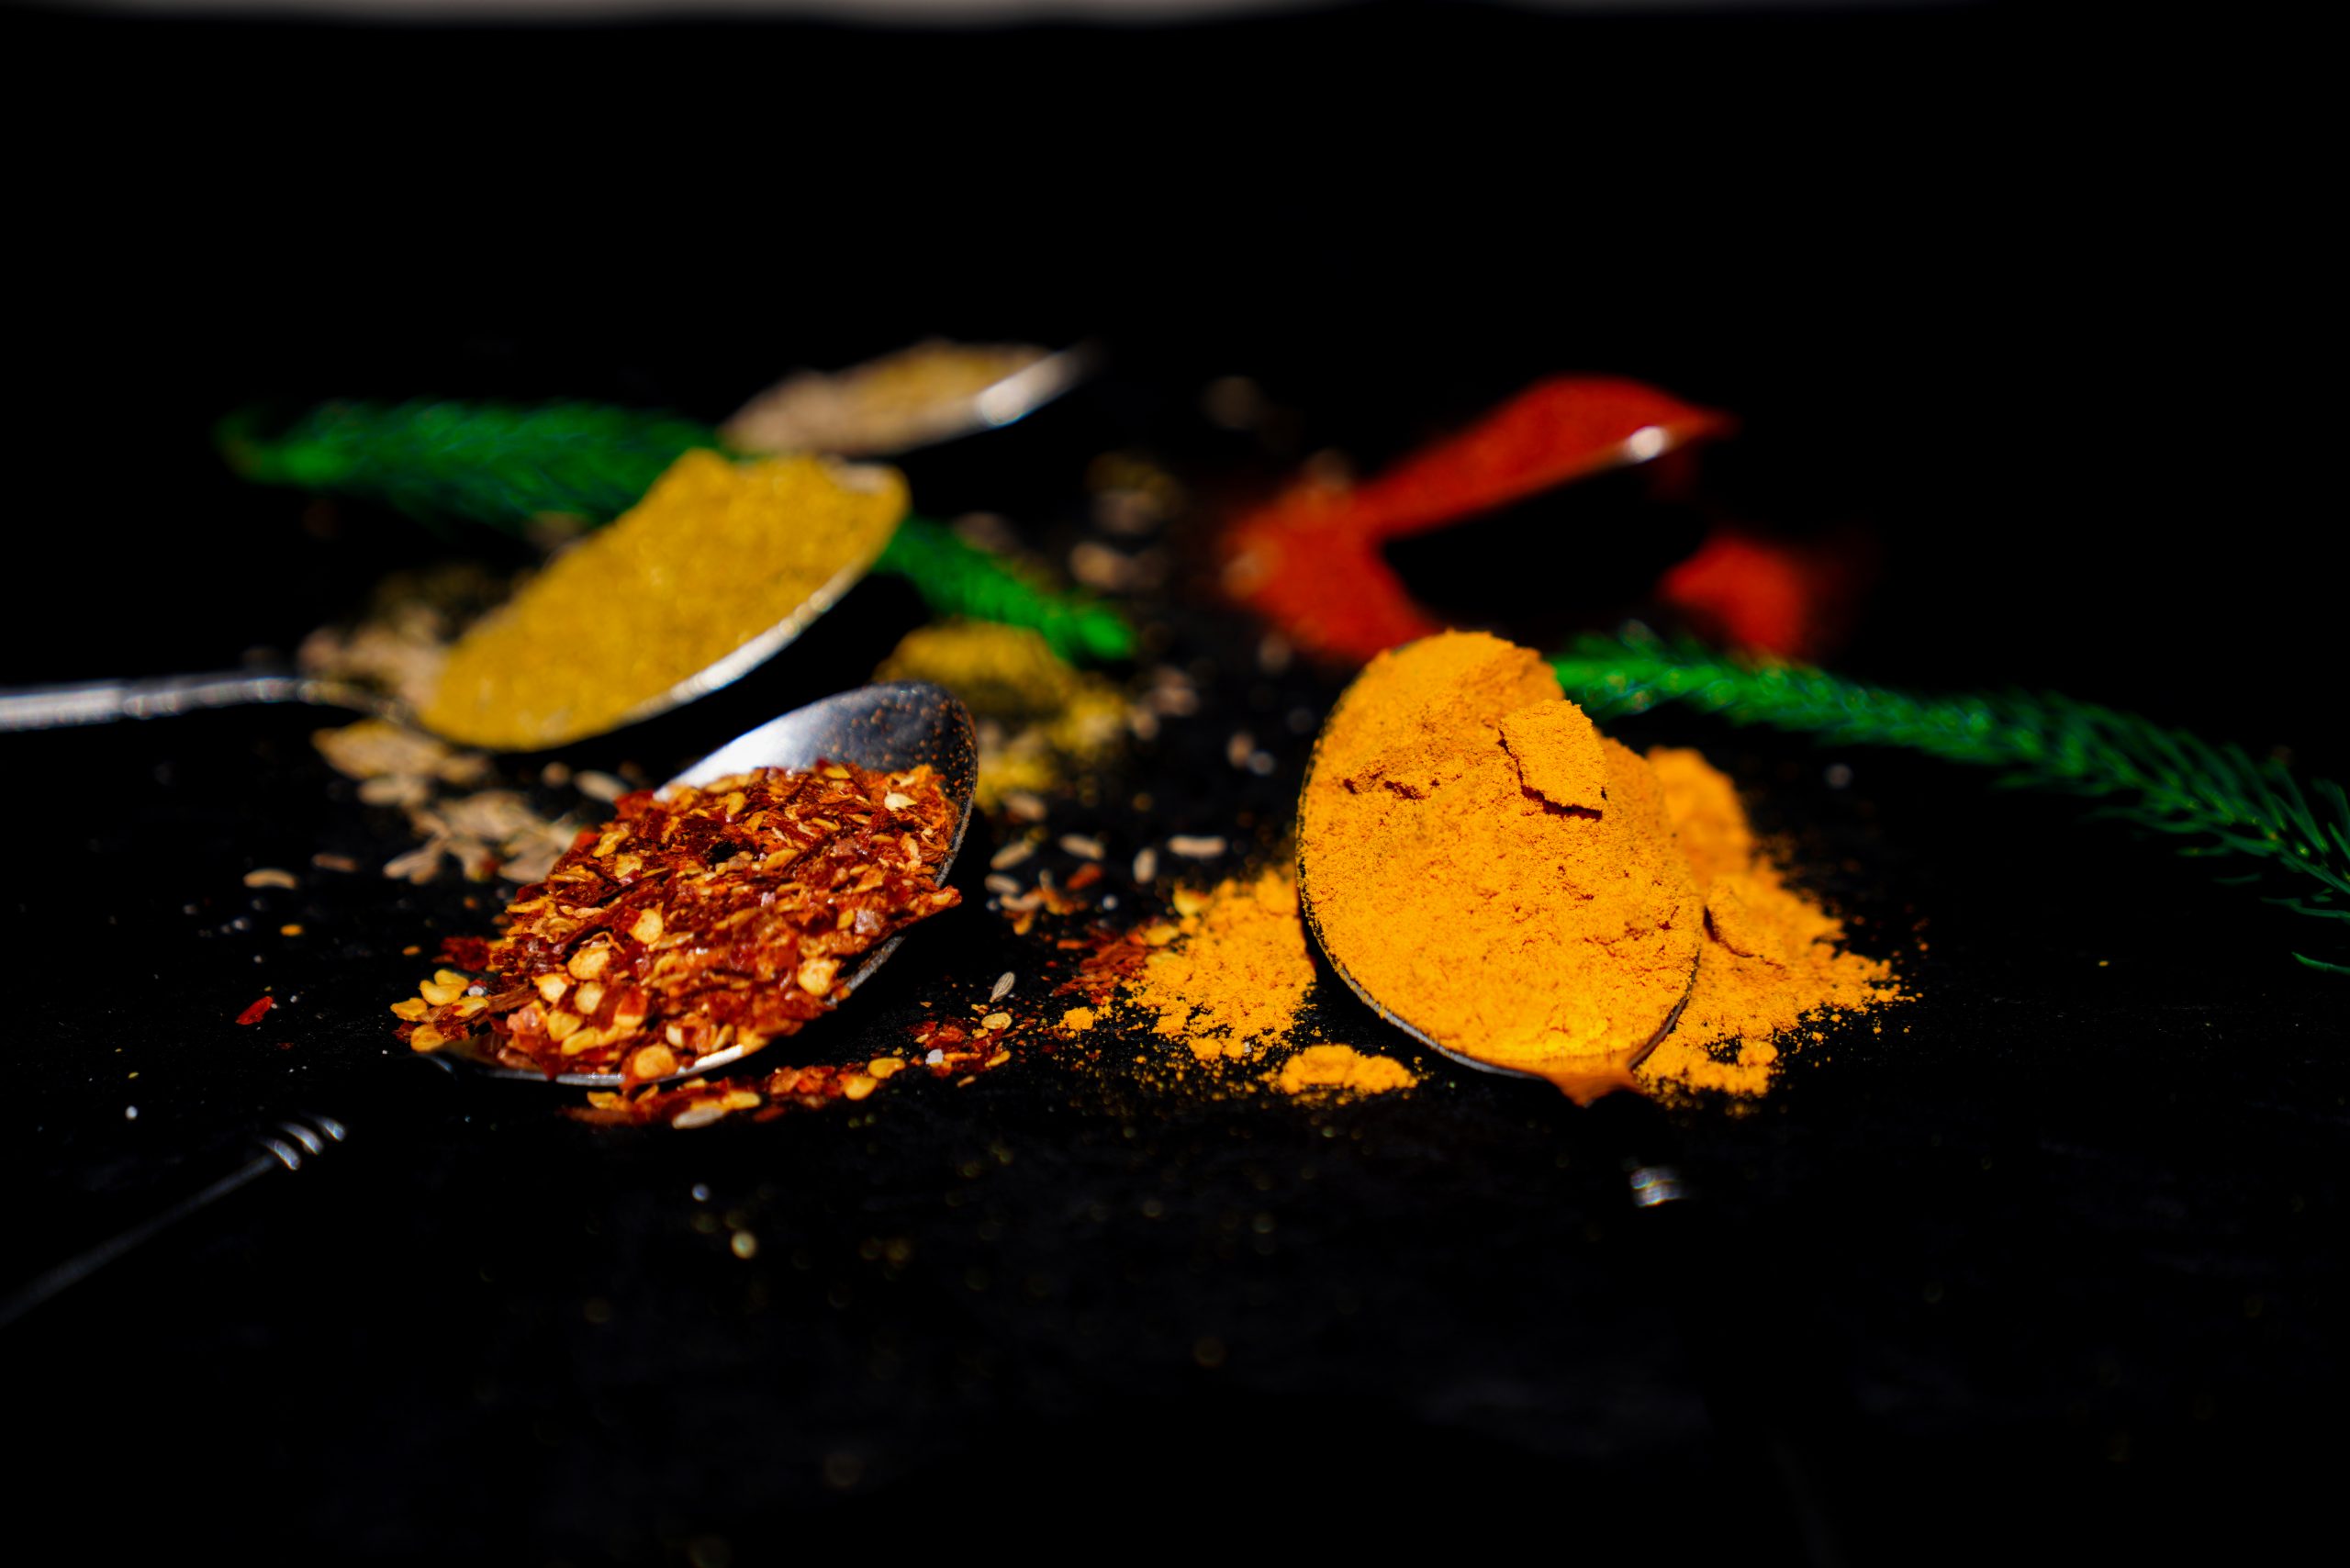 Chili and turmeric powder